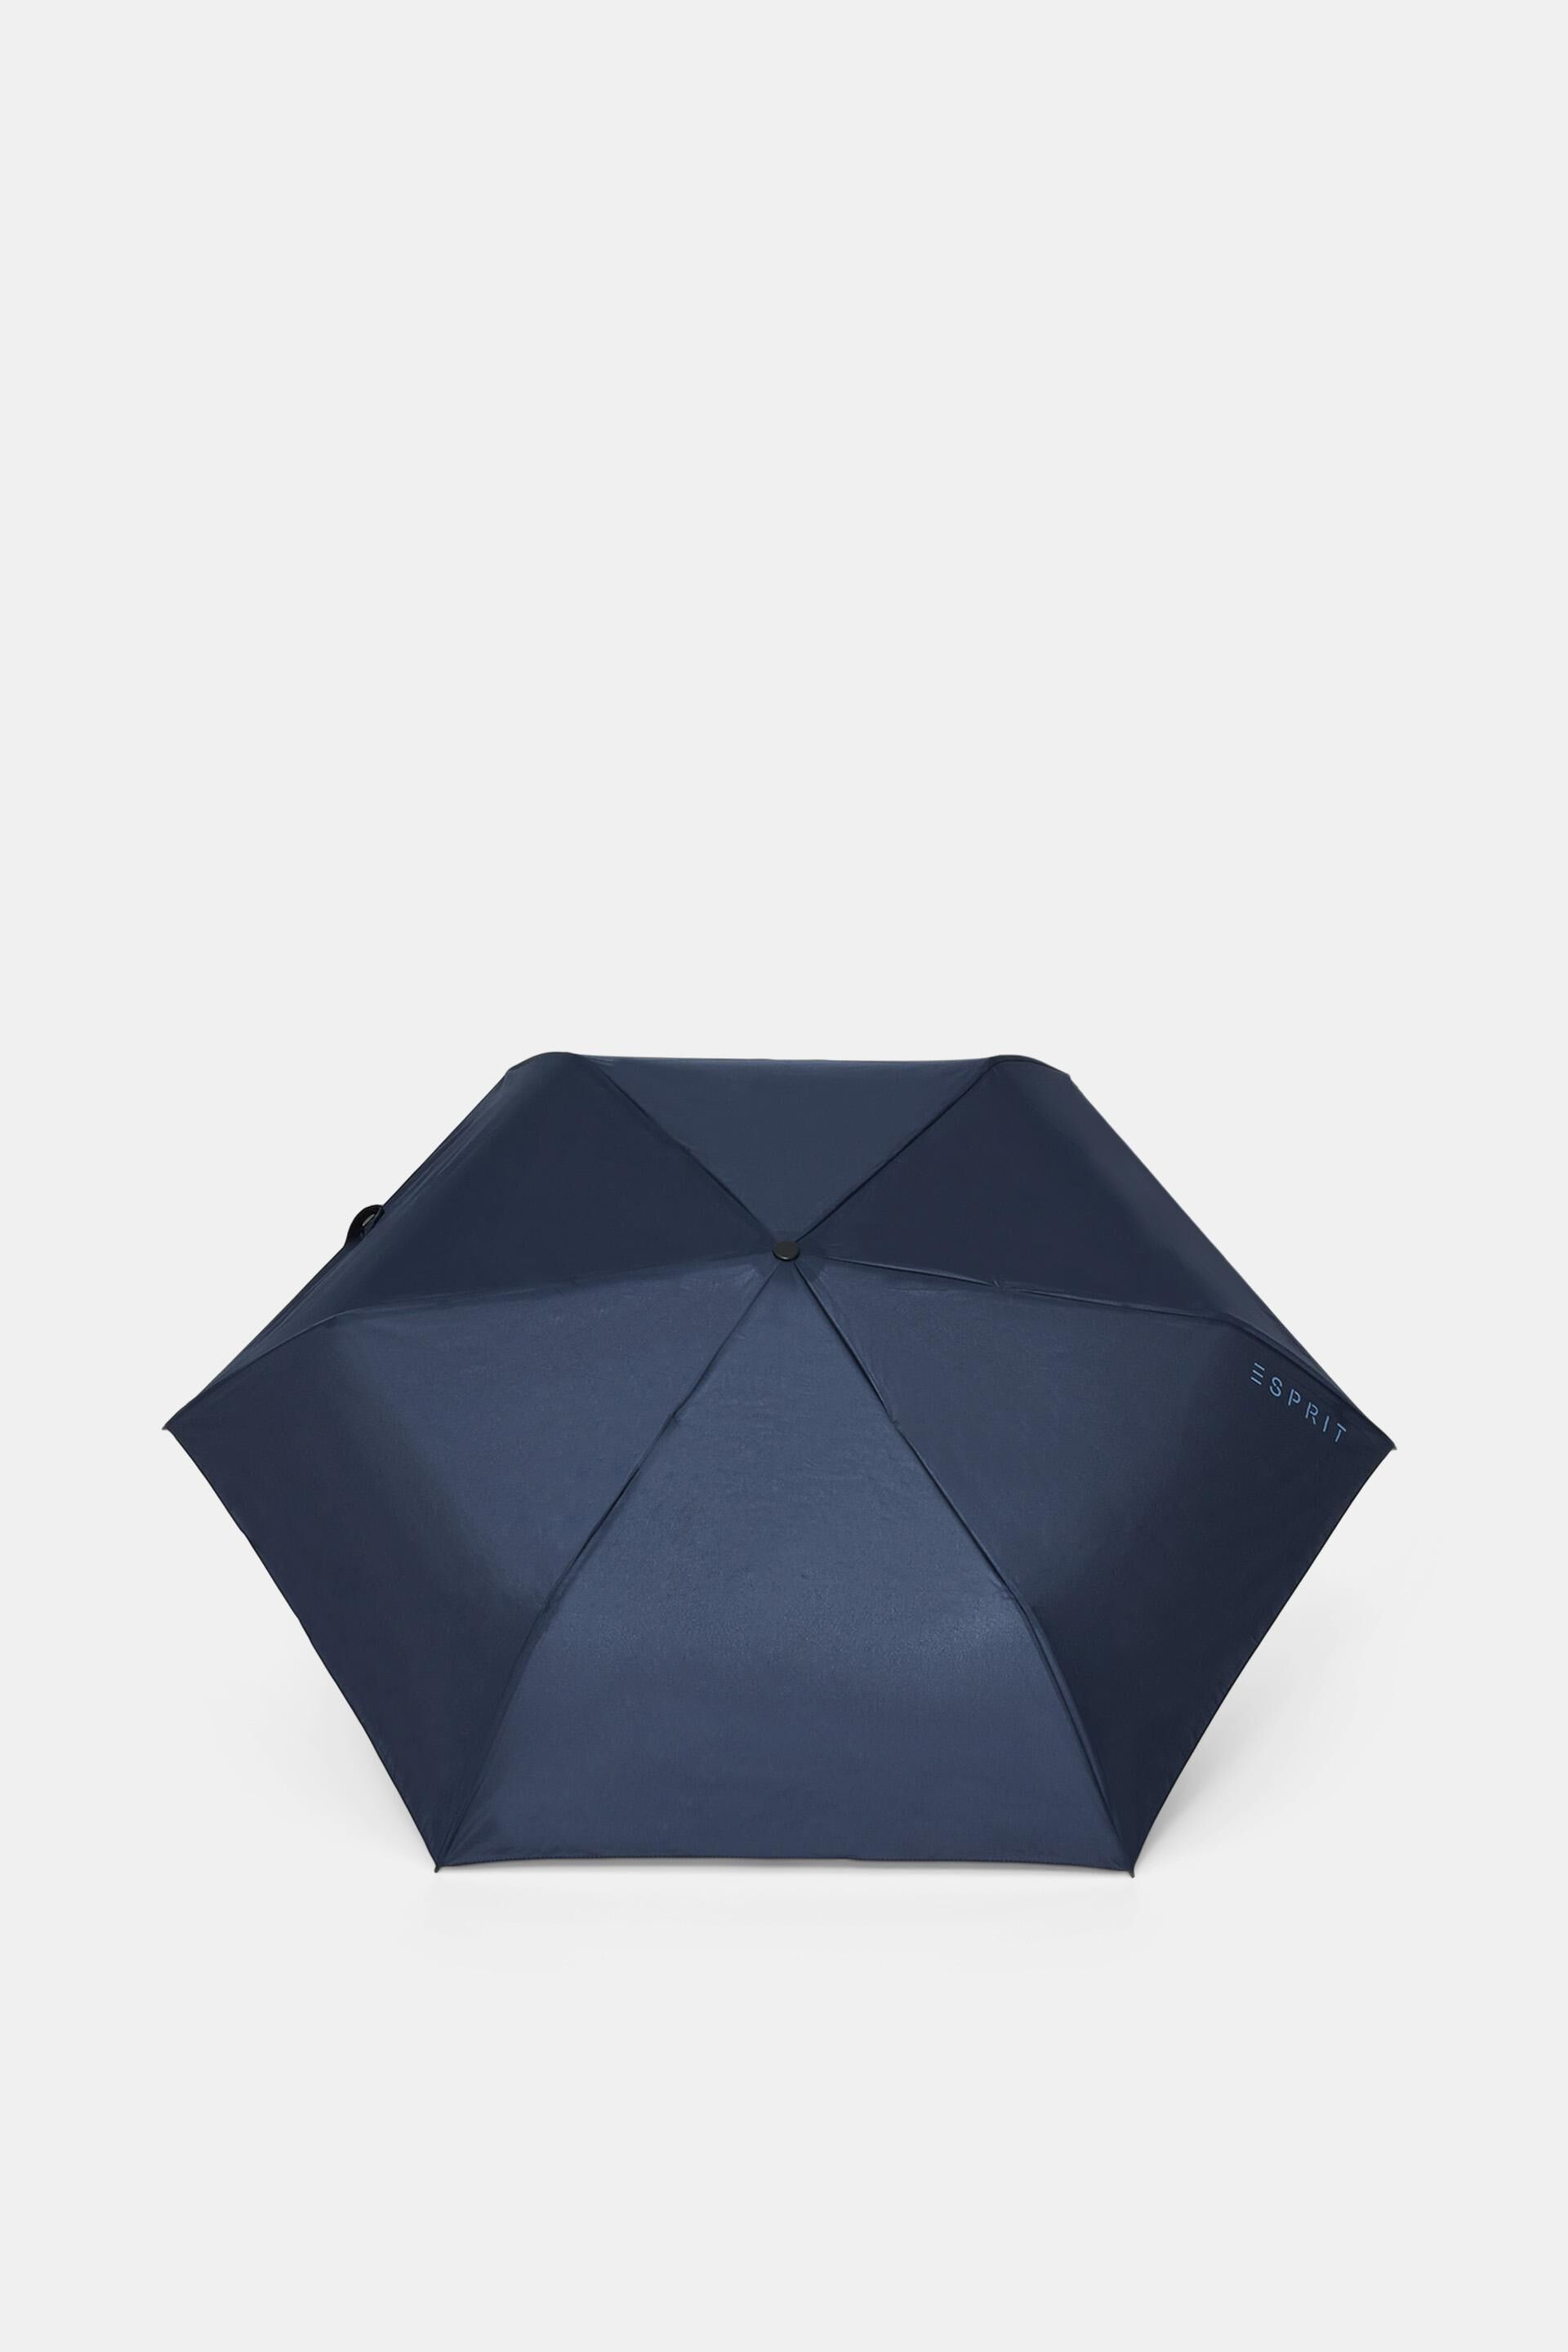 Esprit pocket slimline umbrella Easymatic blue in